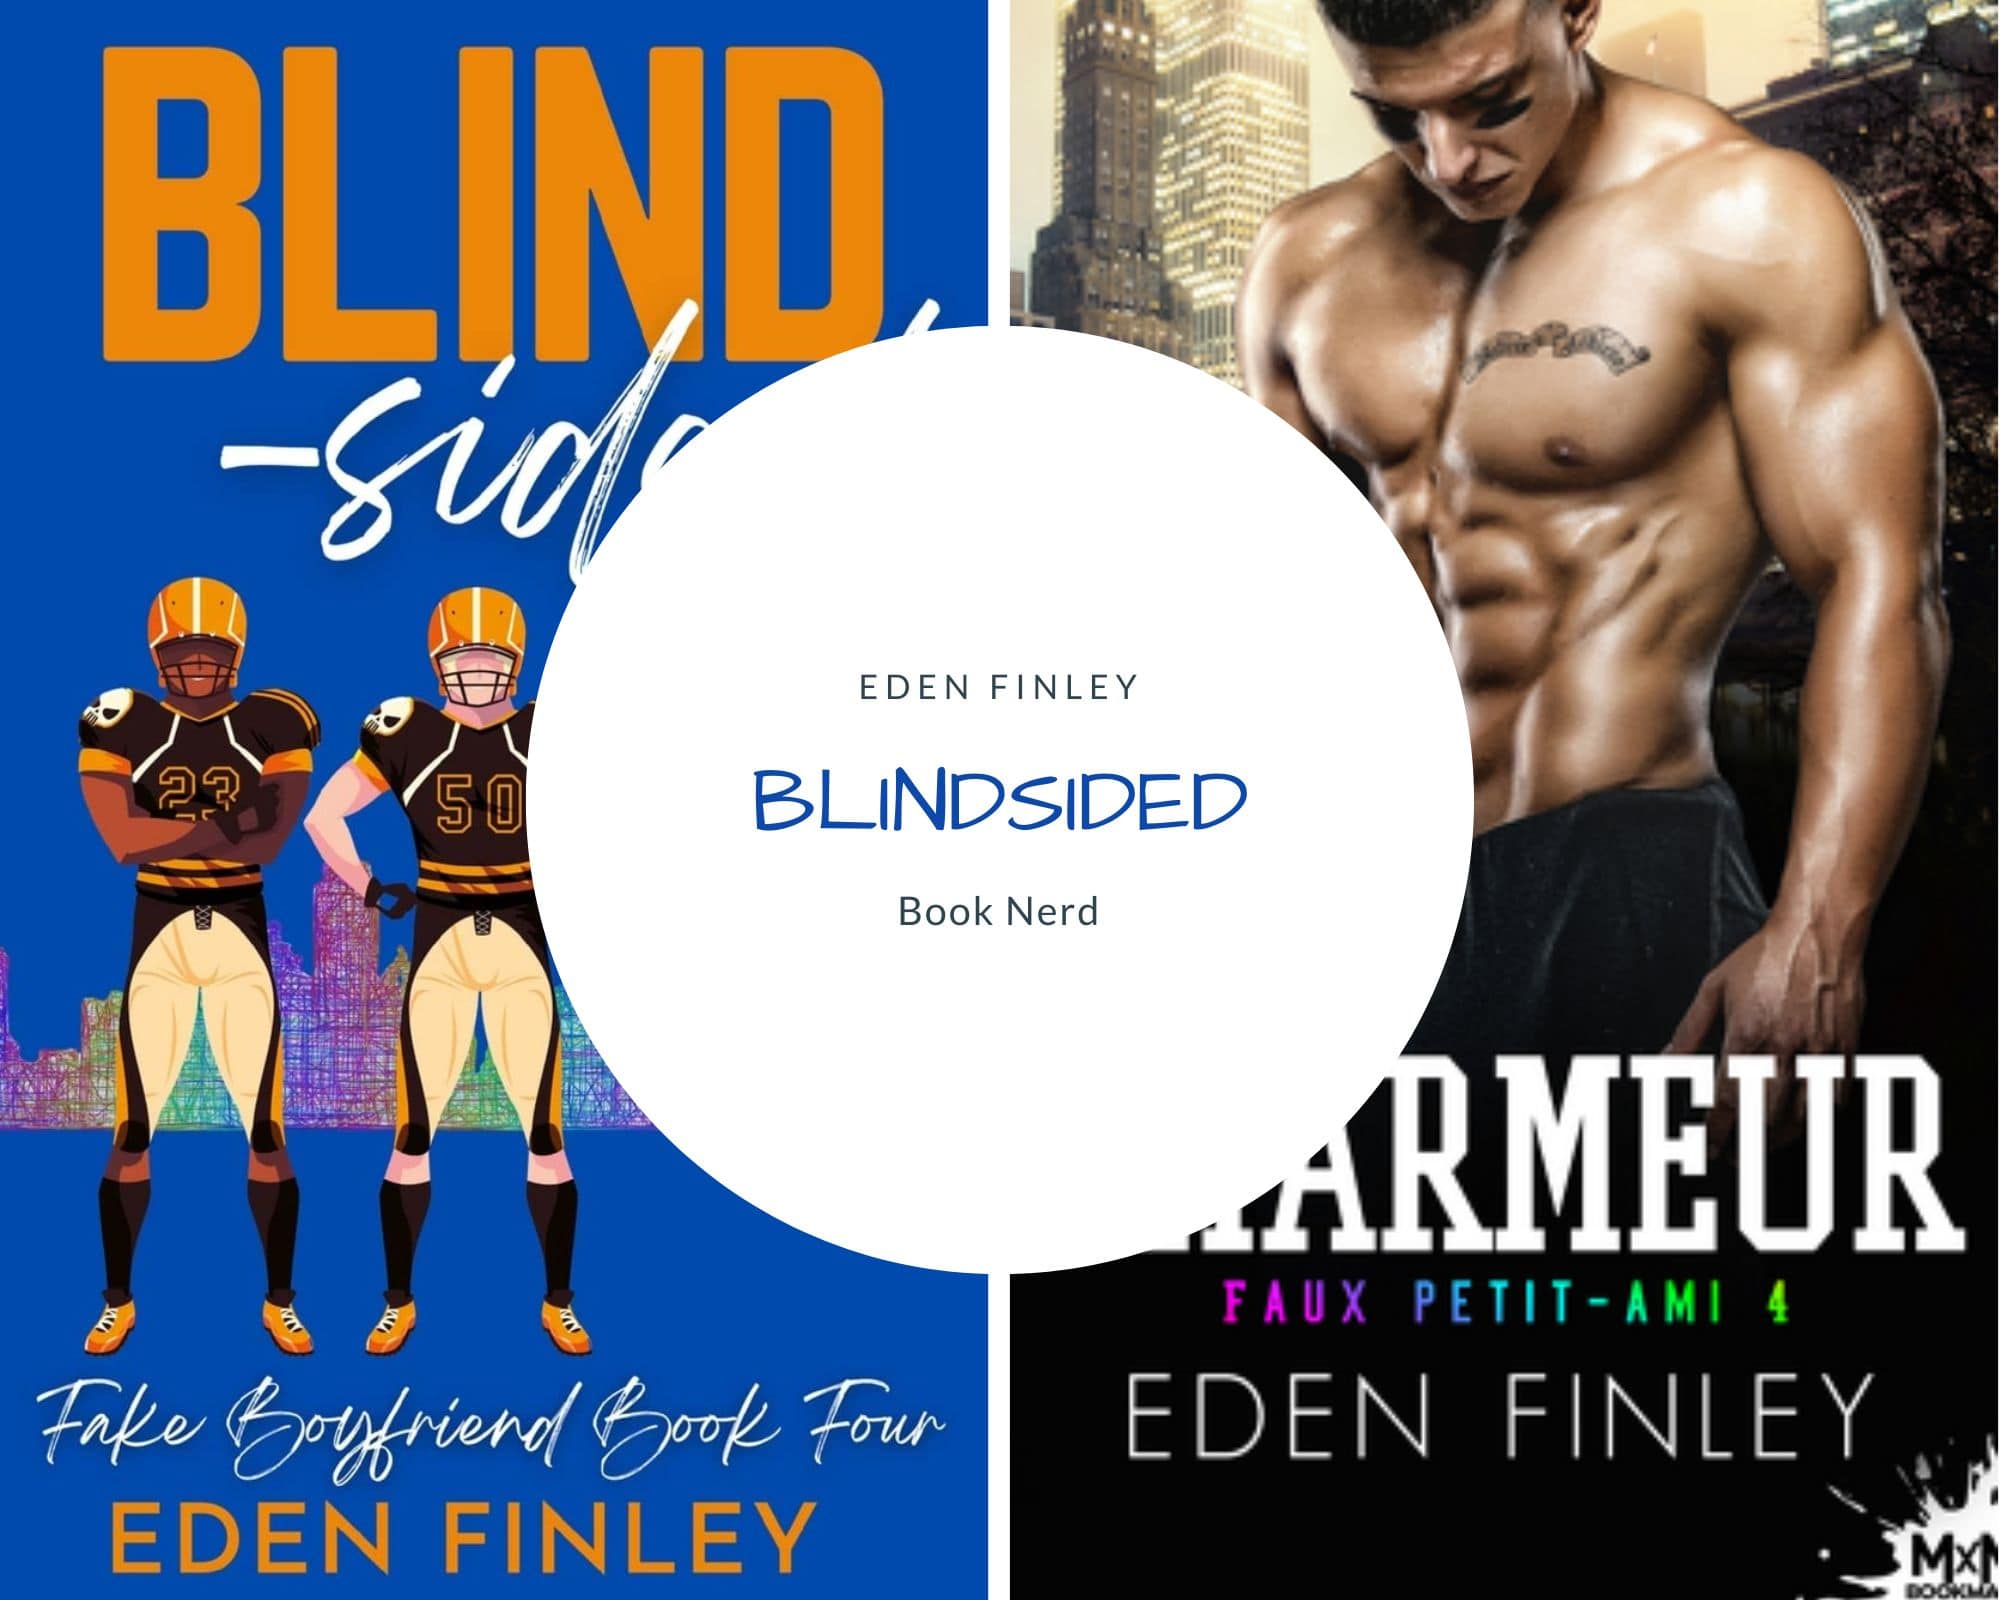 Blindsided - Eden Finley - Fake Boyfriend #4 - Charmeur - Faux Petit-Ami #4